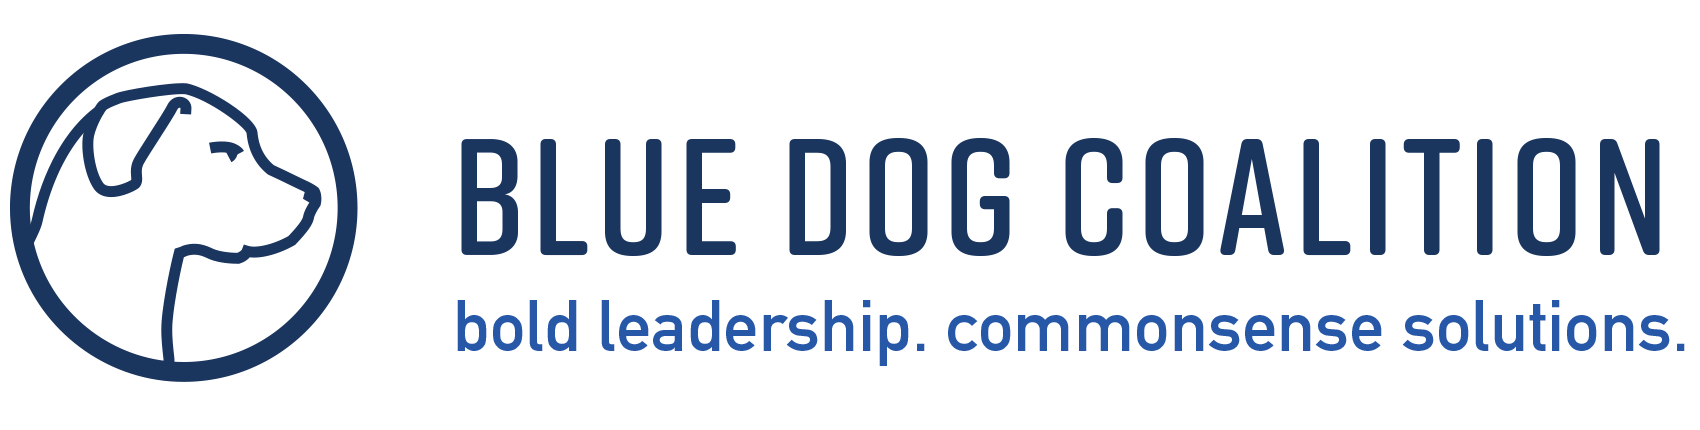 Blue Dog Logo - Blue Dog Coalition. Bold Leadership. Common Sense Solutions